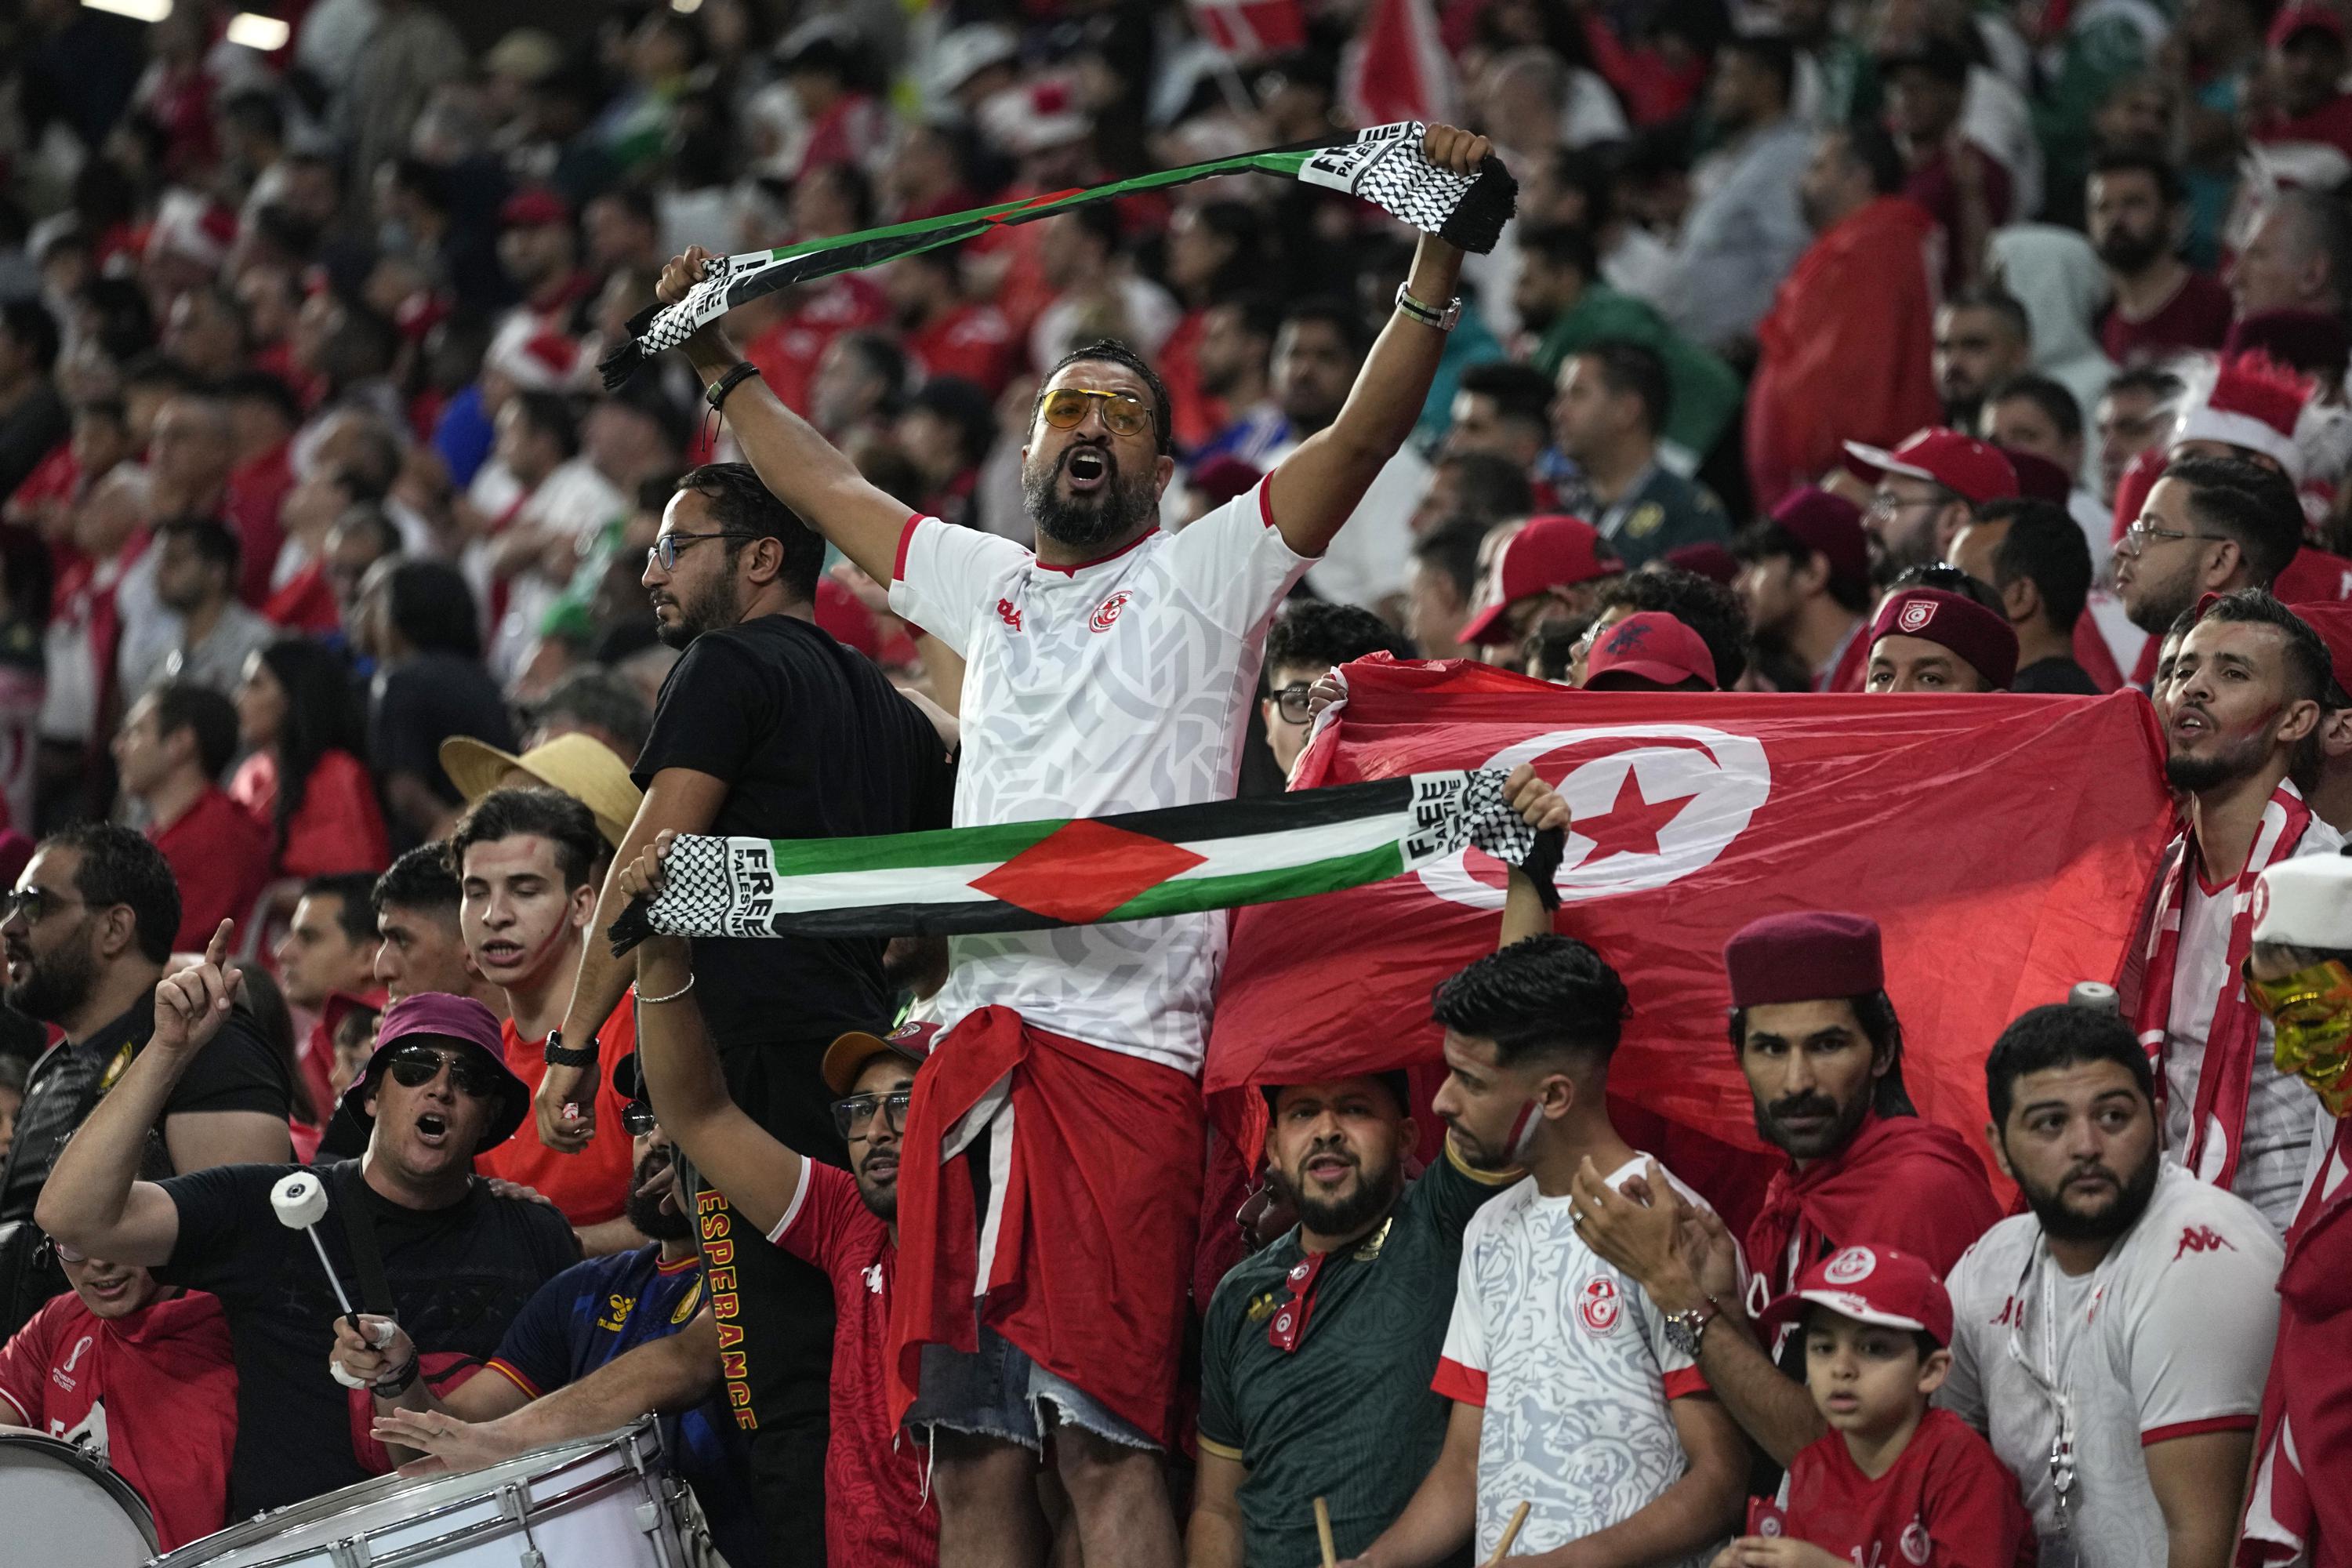 Arab fan support key for Tunisia vs. Australia at World Cup